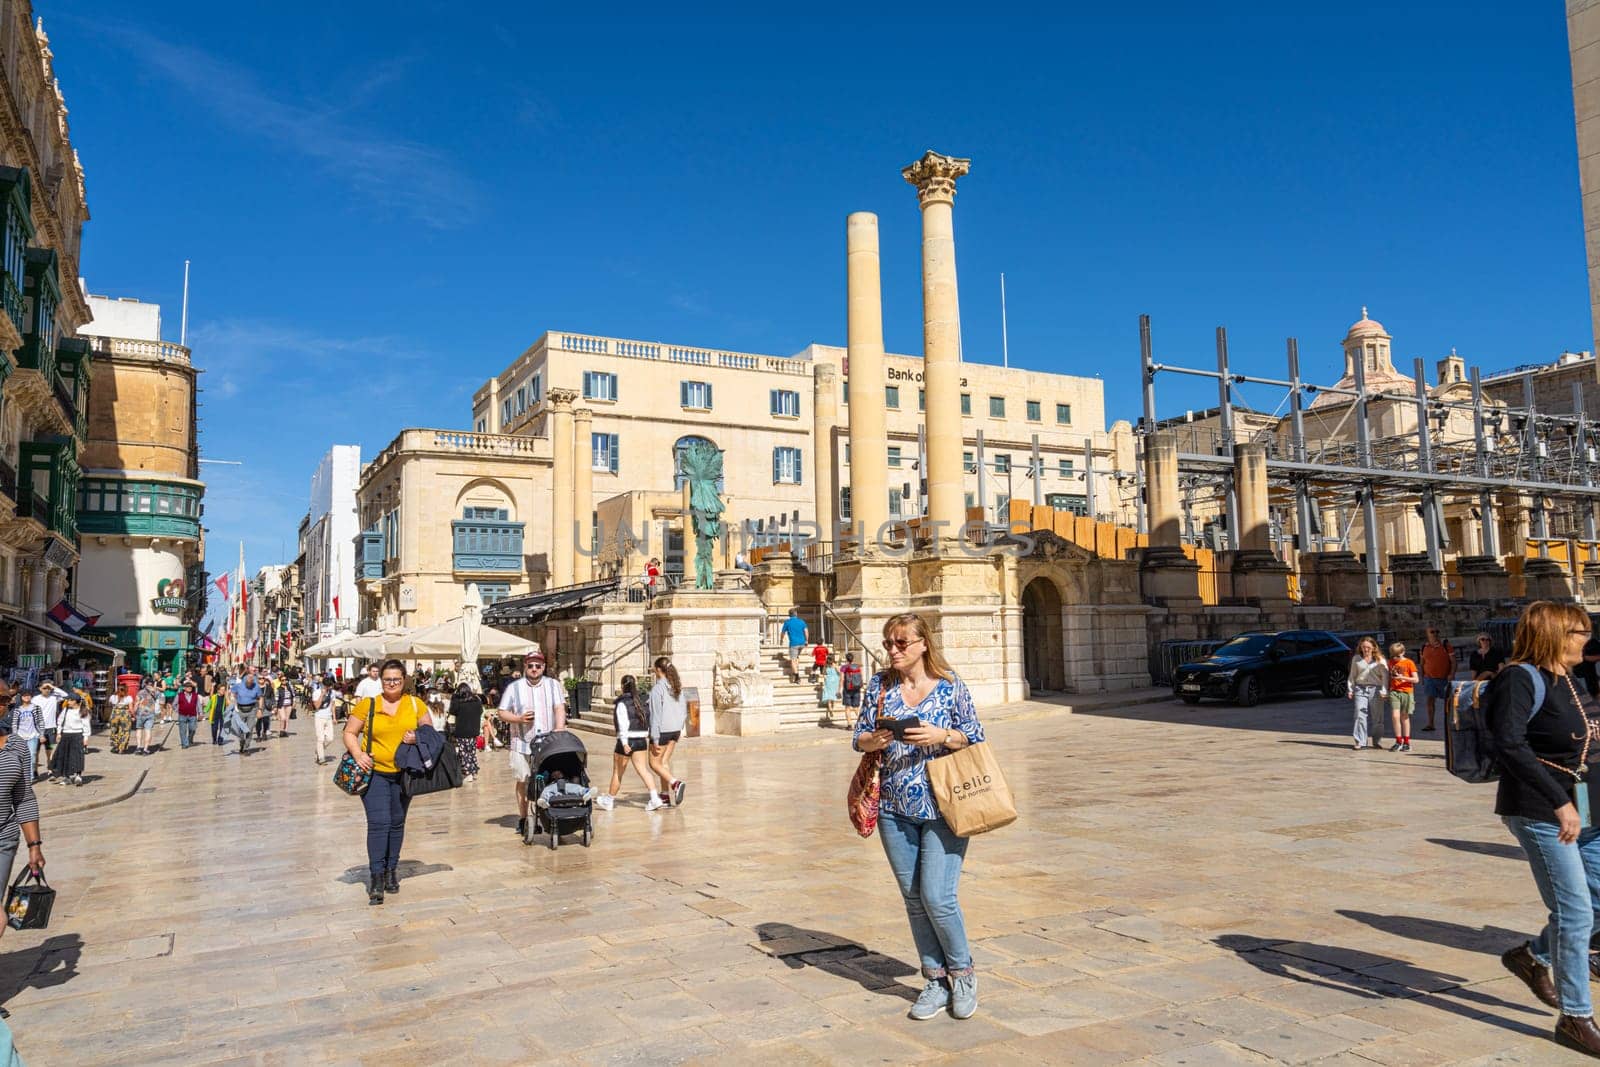 Royal Theater Square in Valletta, Malta by sergiodv